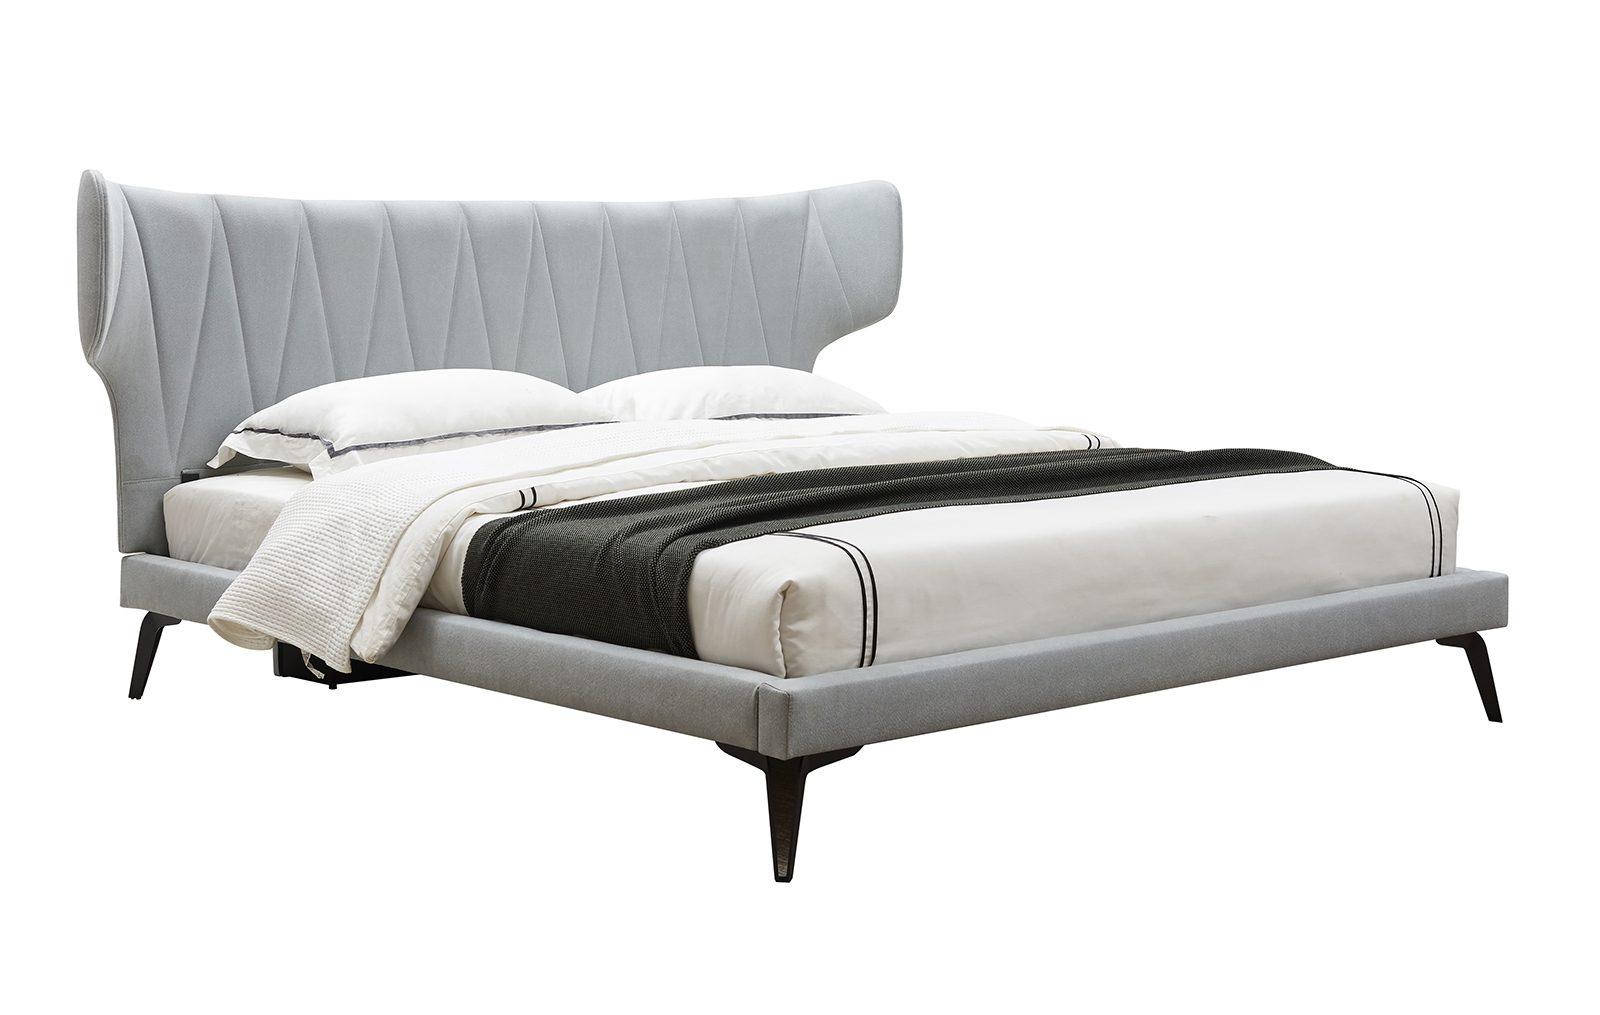 Кровать europe style серый 230.0x112.0x213.0 см.